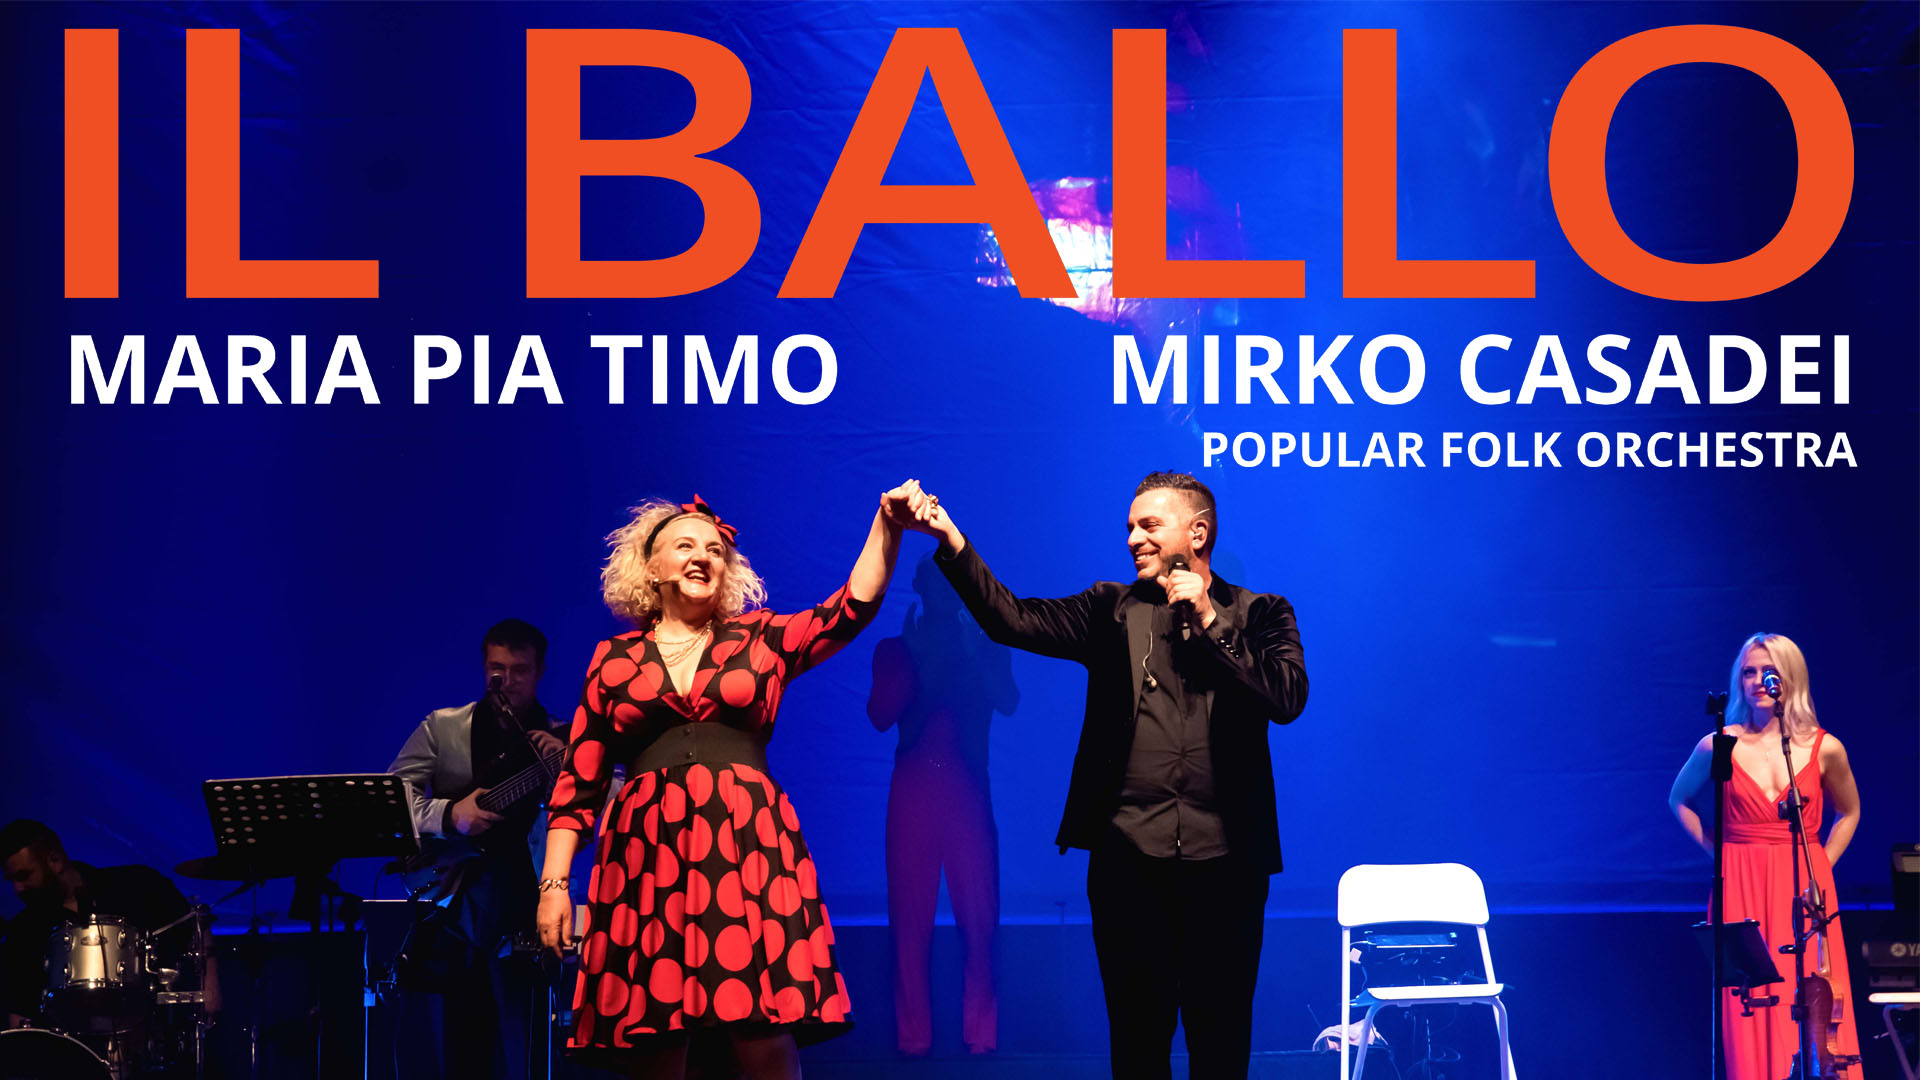 Mirko Casadei Popular Folk Orchestra e Maria Pia Timo